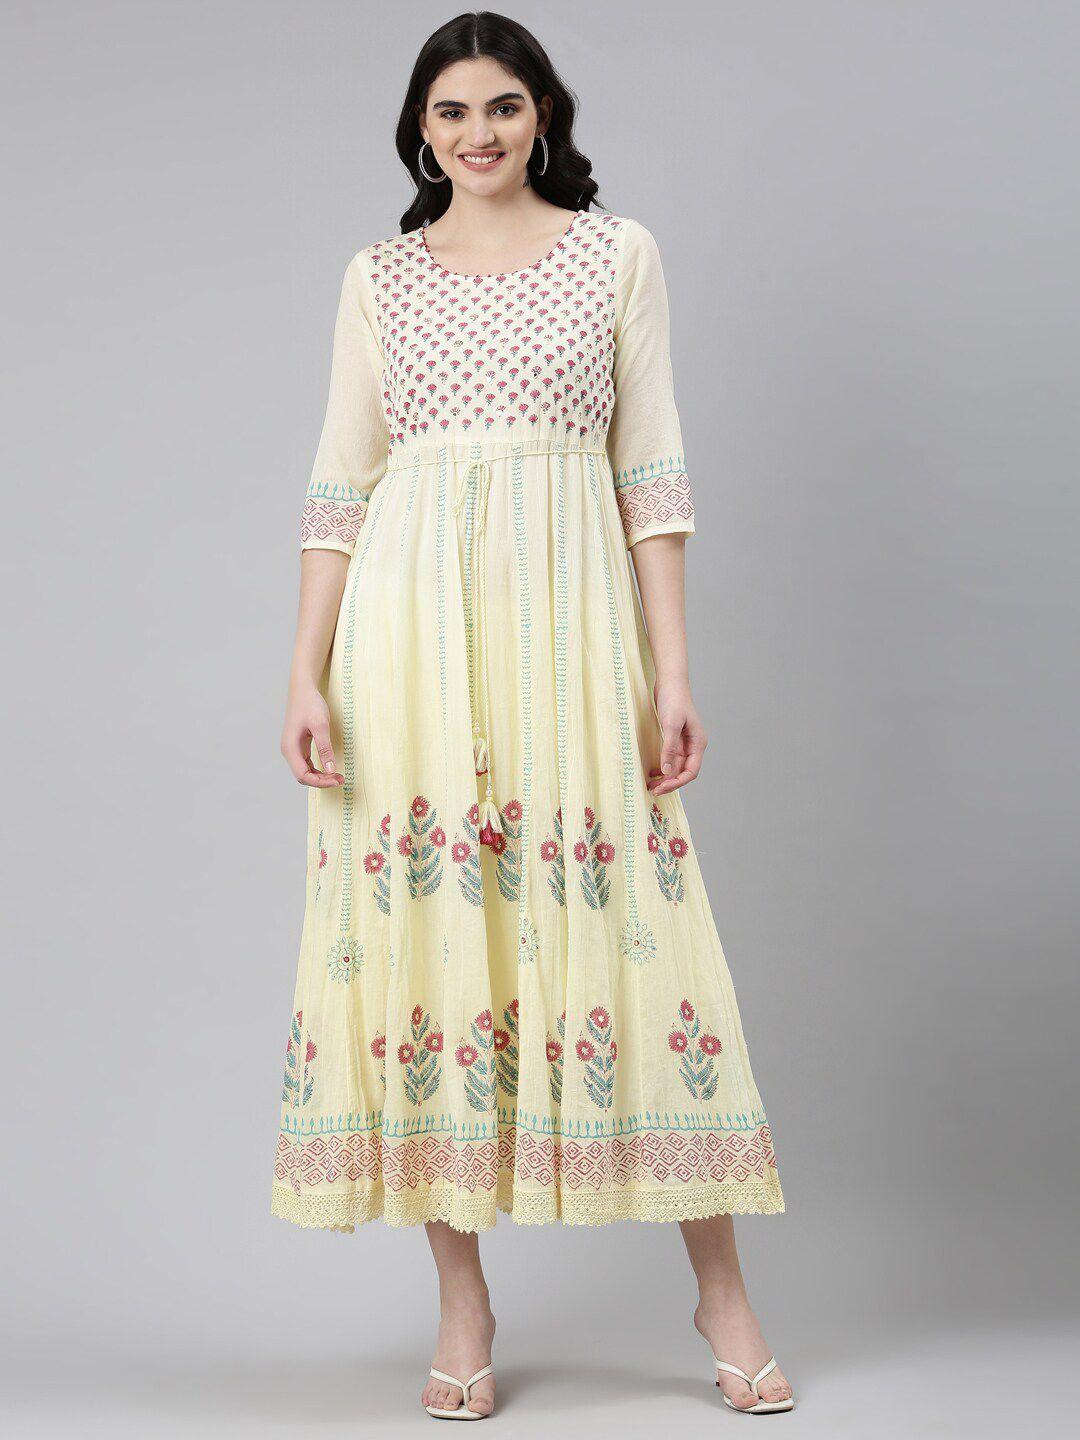 neerus-floral-printed-round-neck-three-quarter-sleeves-cotton-ethnic-dress